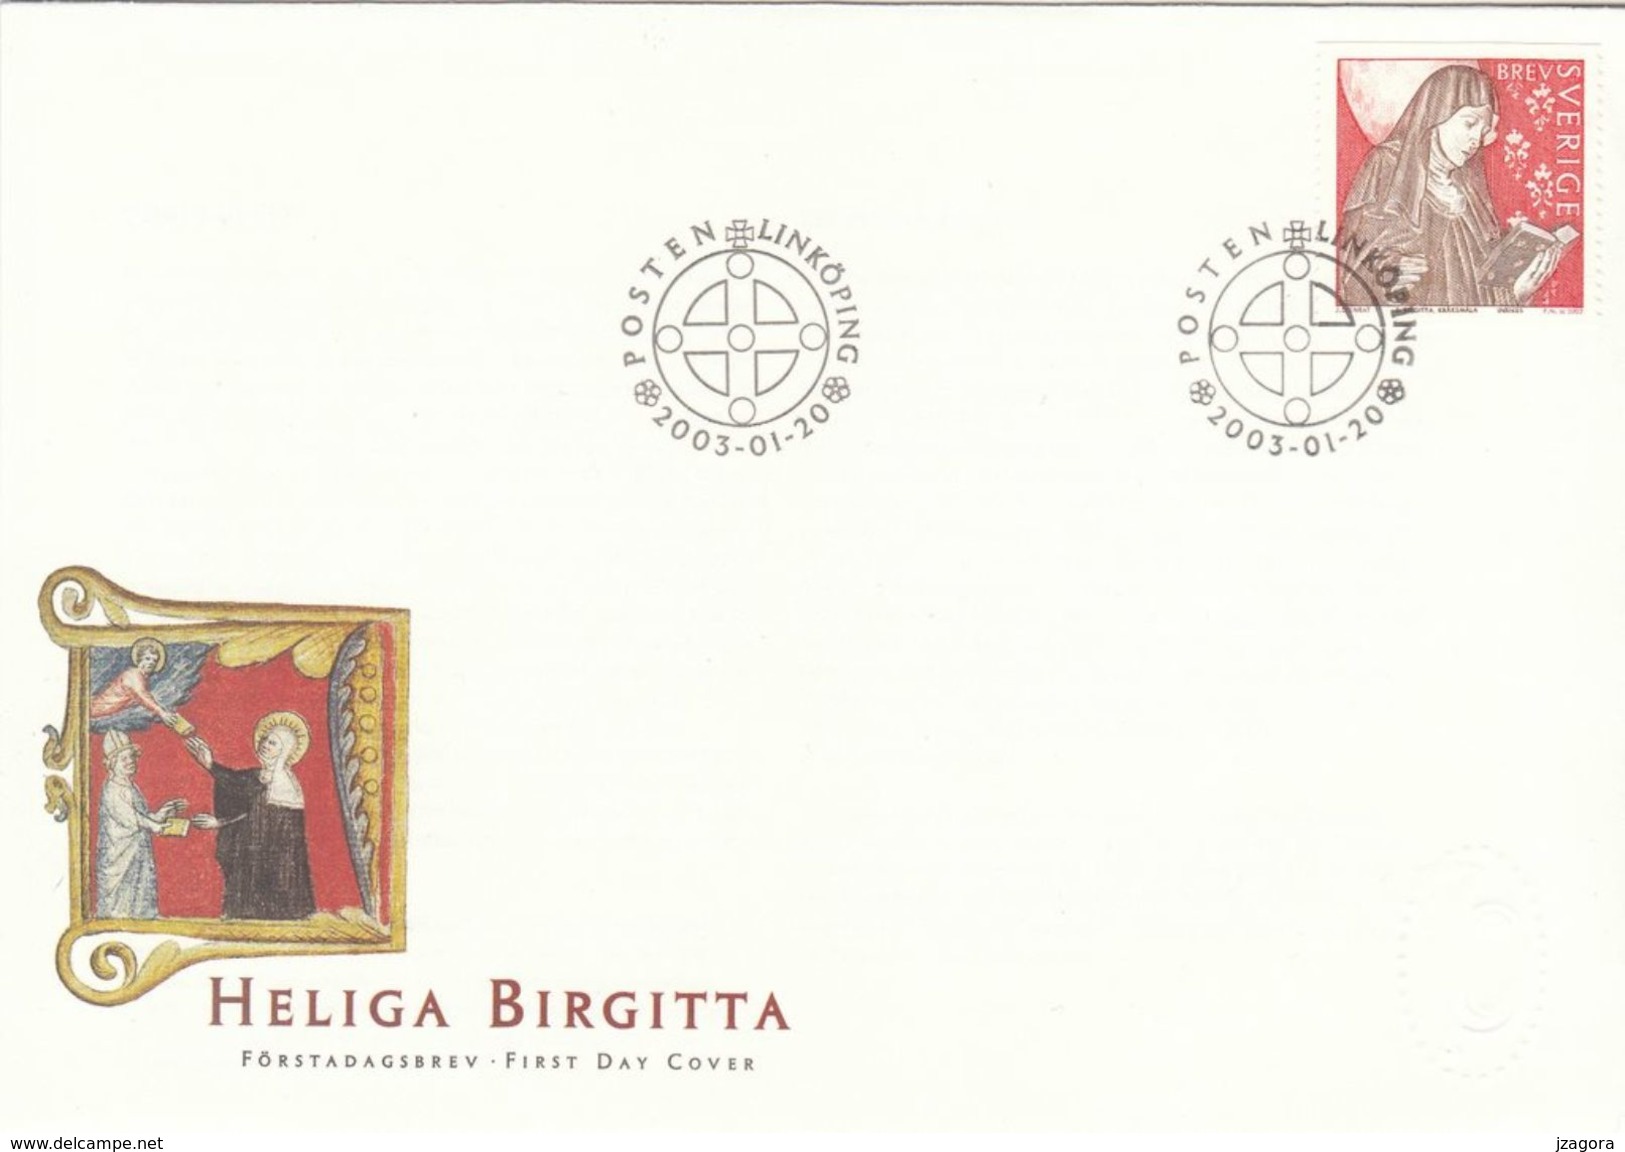 RELIGION HOLY MEN ST SAINT SANTA BIRGITTA BRIDGET BRIGIDA SWEDEN SUEDE SCHWEDEN 2003 FDC MI 2338 F 2351 - Theologians